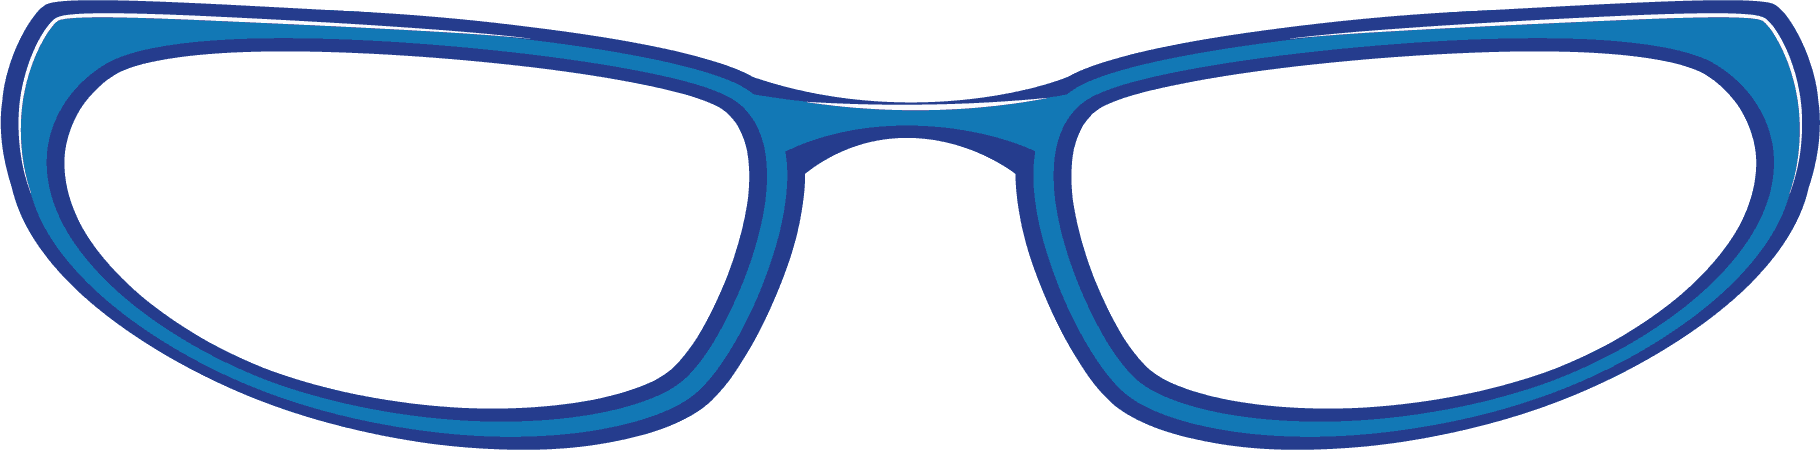 clipart reading glasses - photo #19